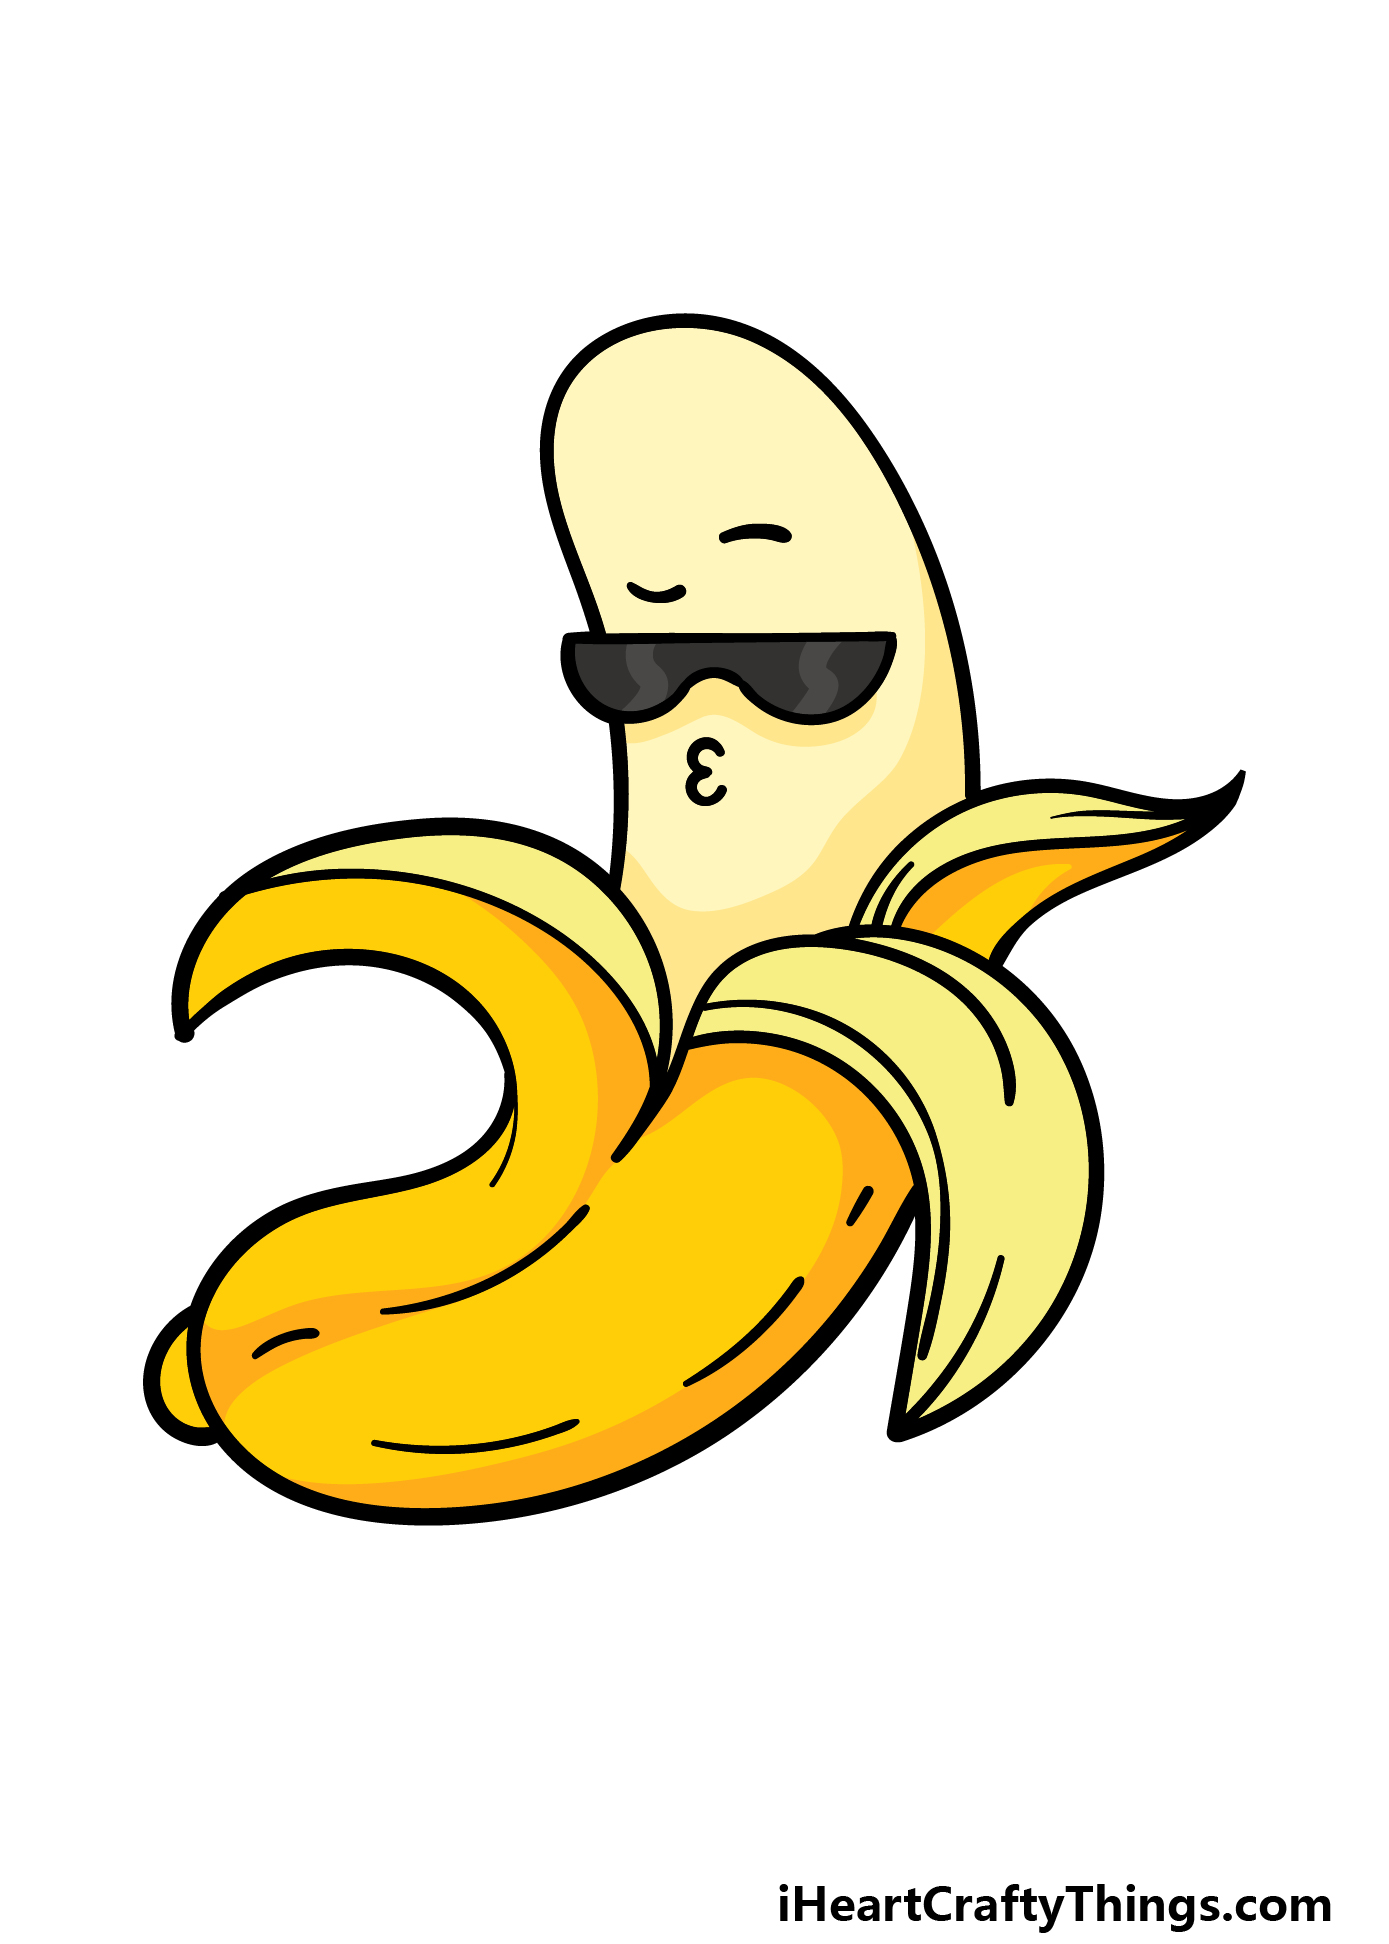 How to draw a banana  Lets Draw That  Banana sketch Easy drawings  Banana